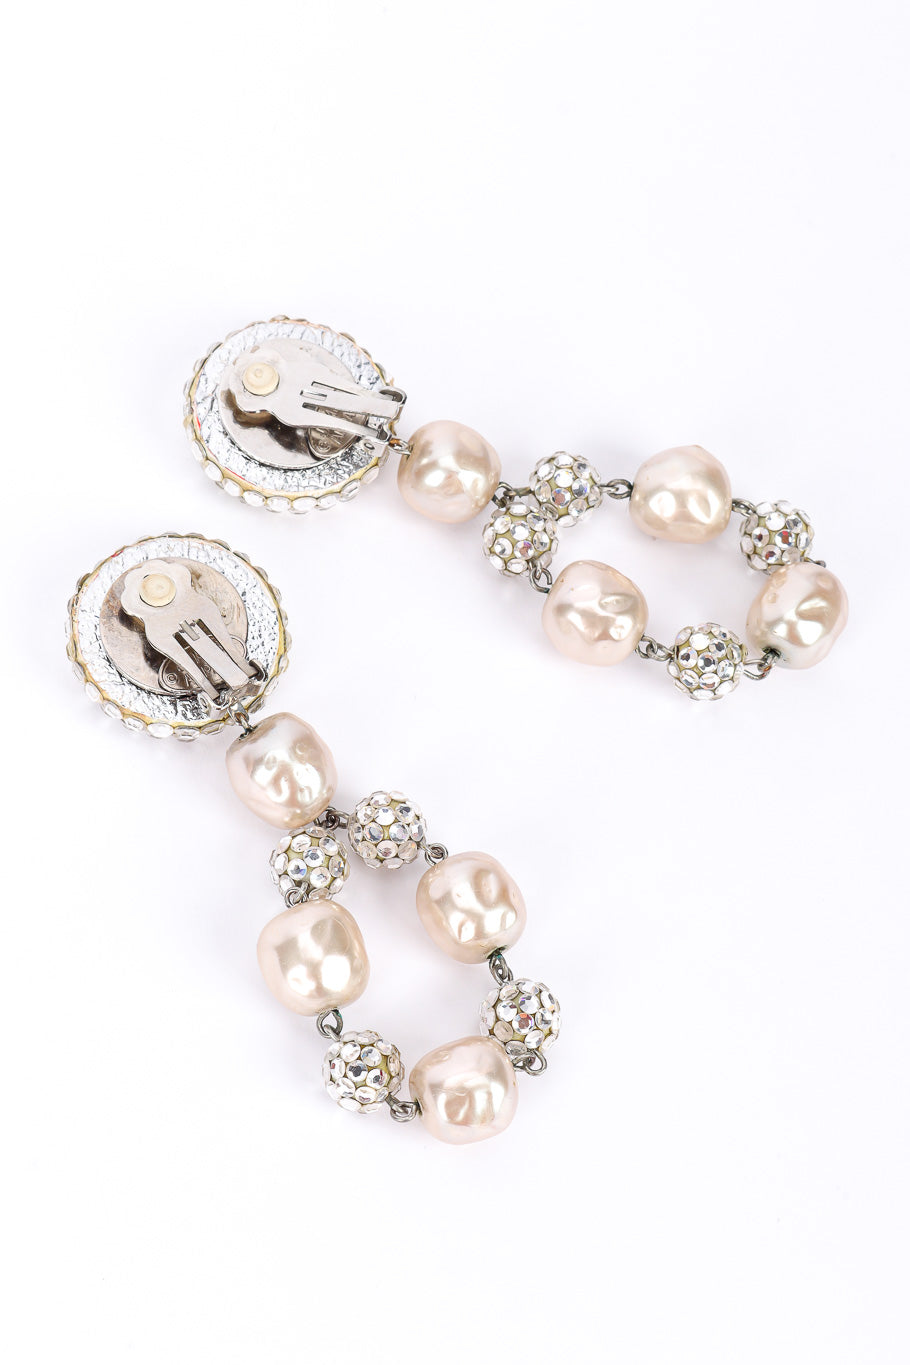 Pearl drop earrings by James Arpad on white background backs @recessla